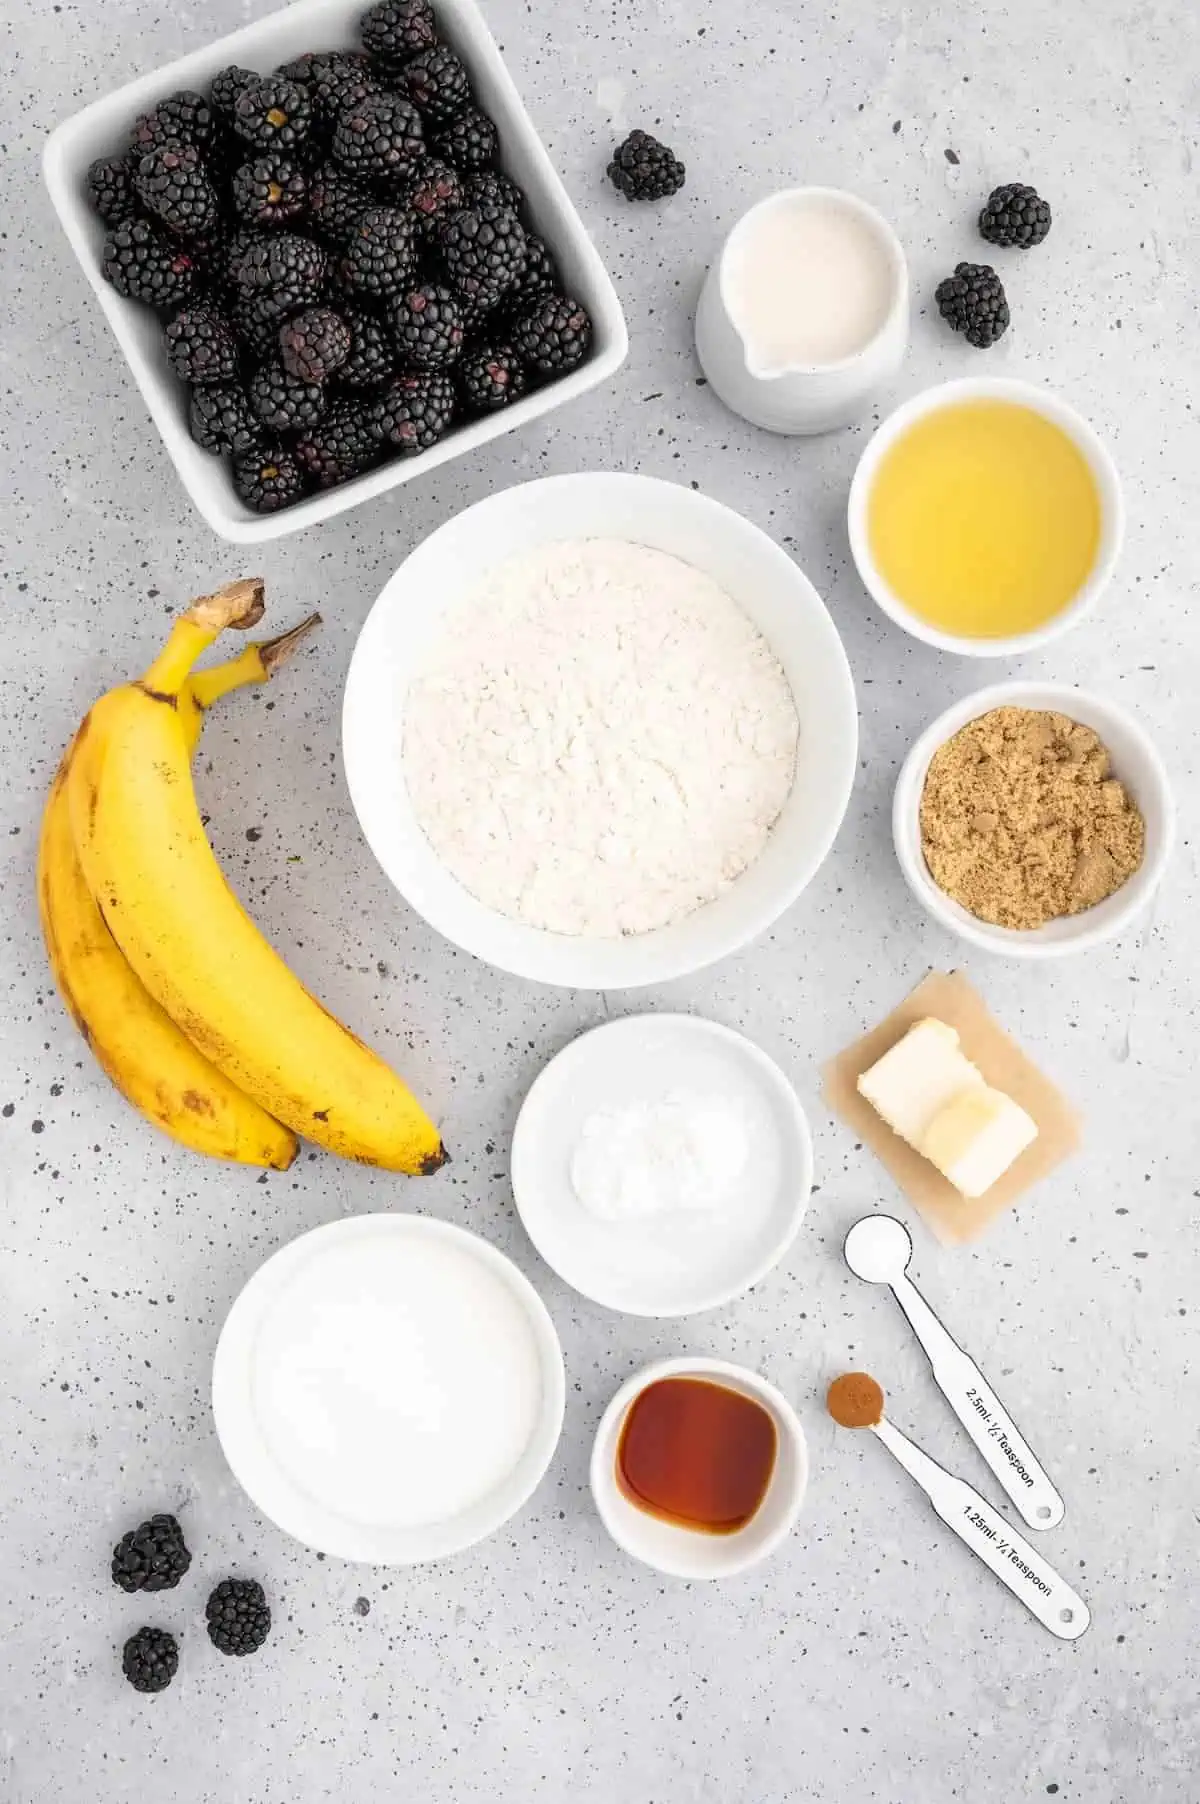 Key ingredients for vegan blackberry muffins.